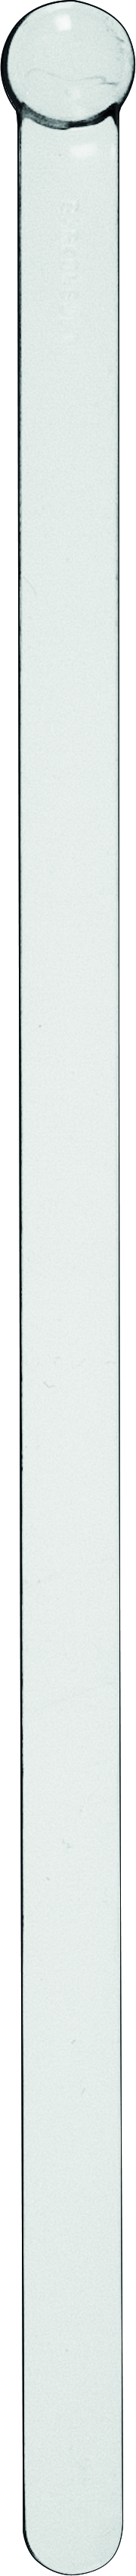 Cocktail stirrer, transparent - 15,3cm (500pcs.)